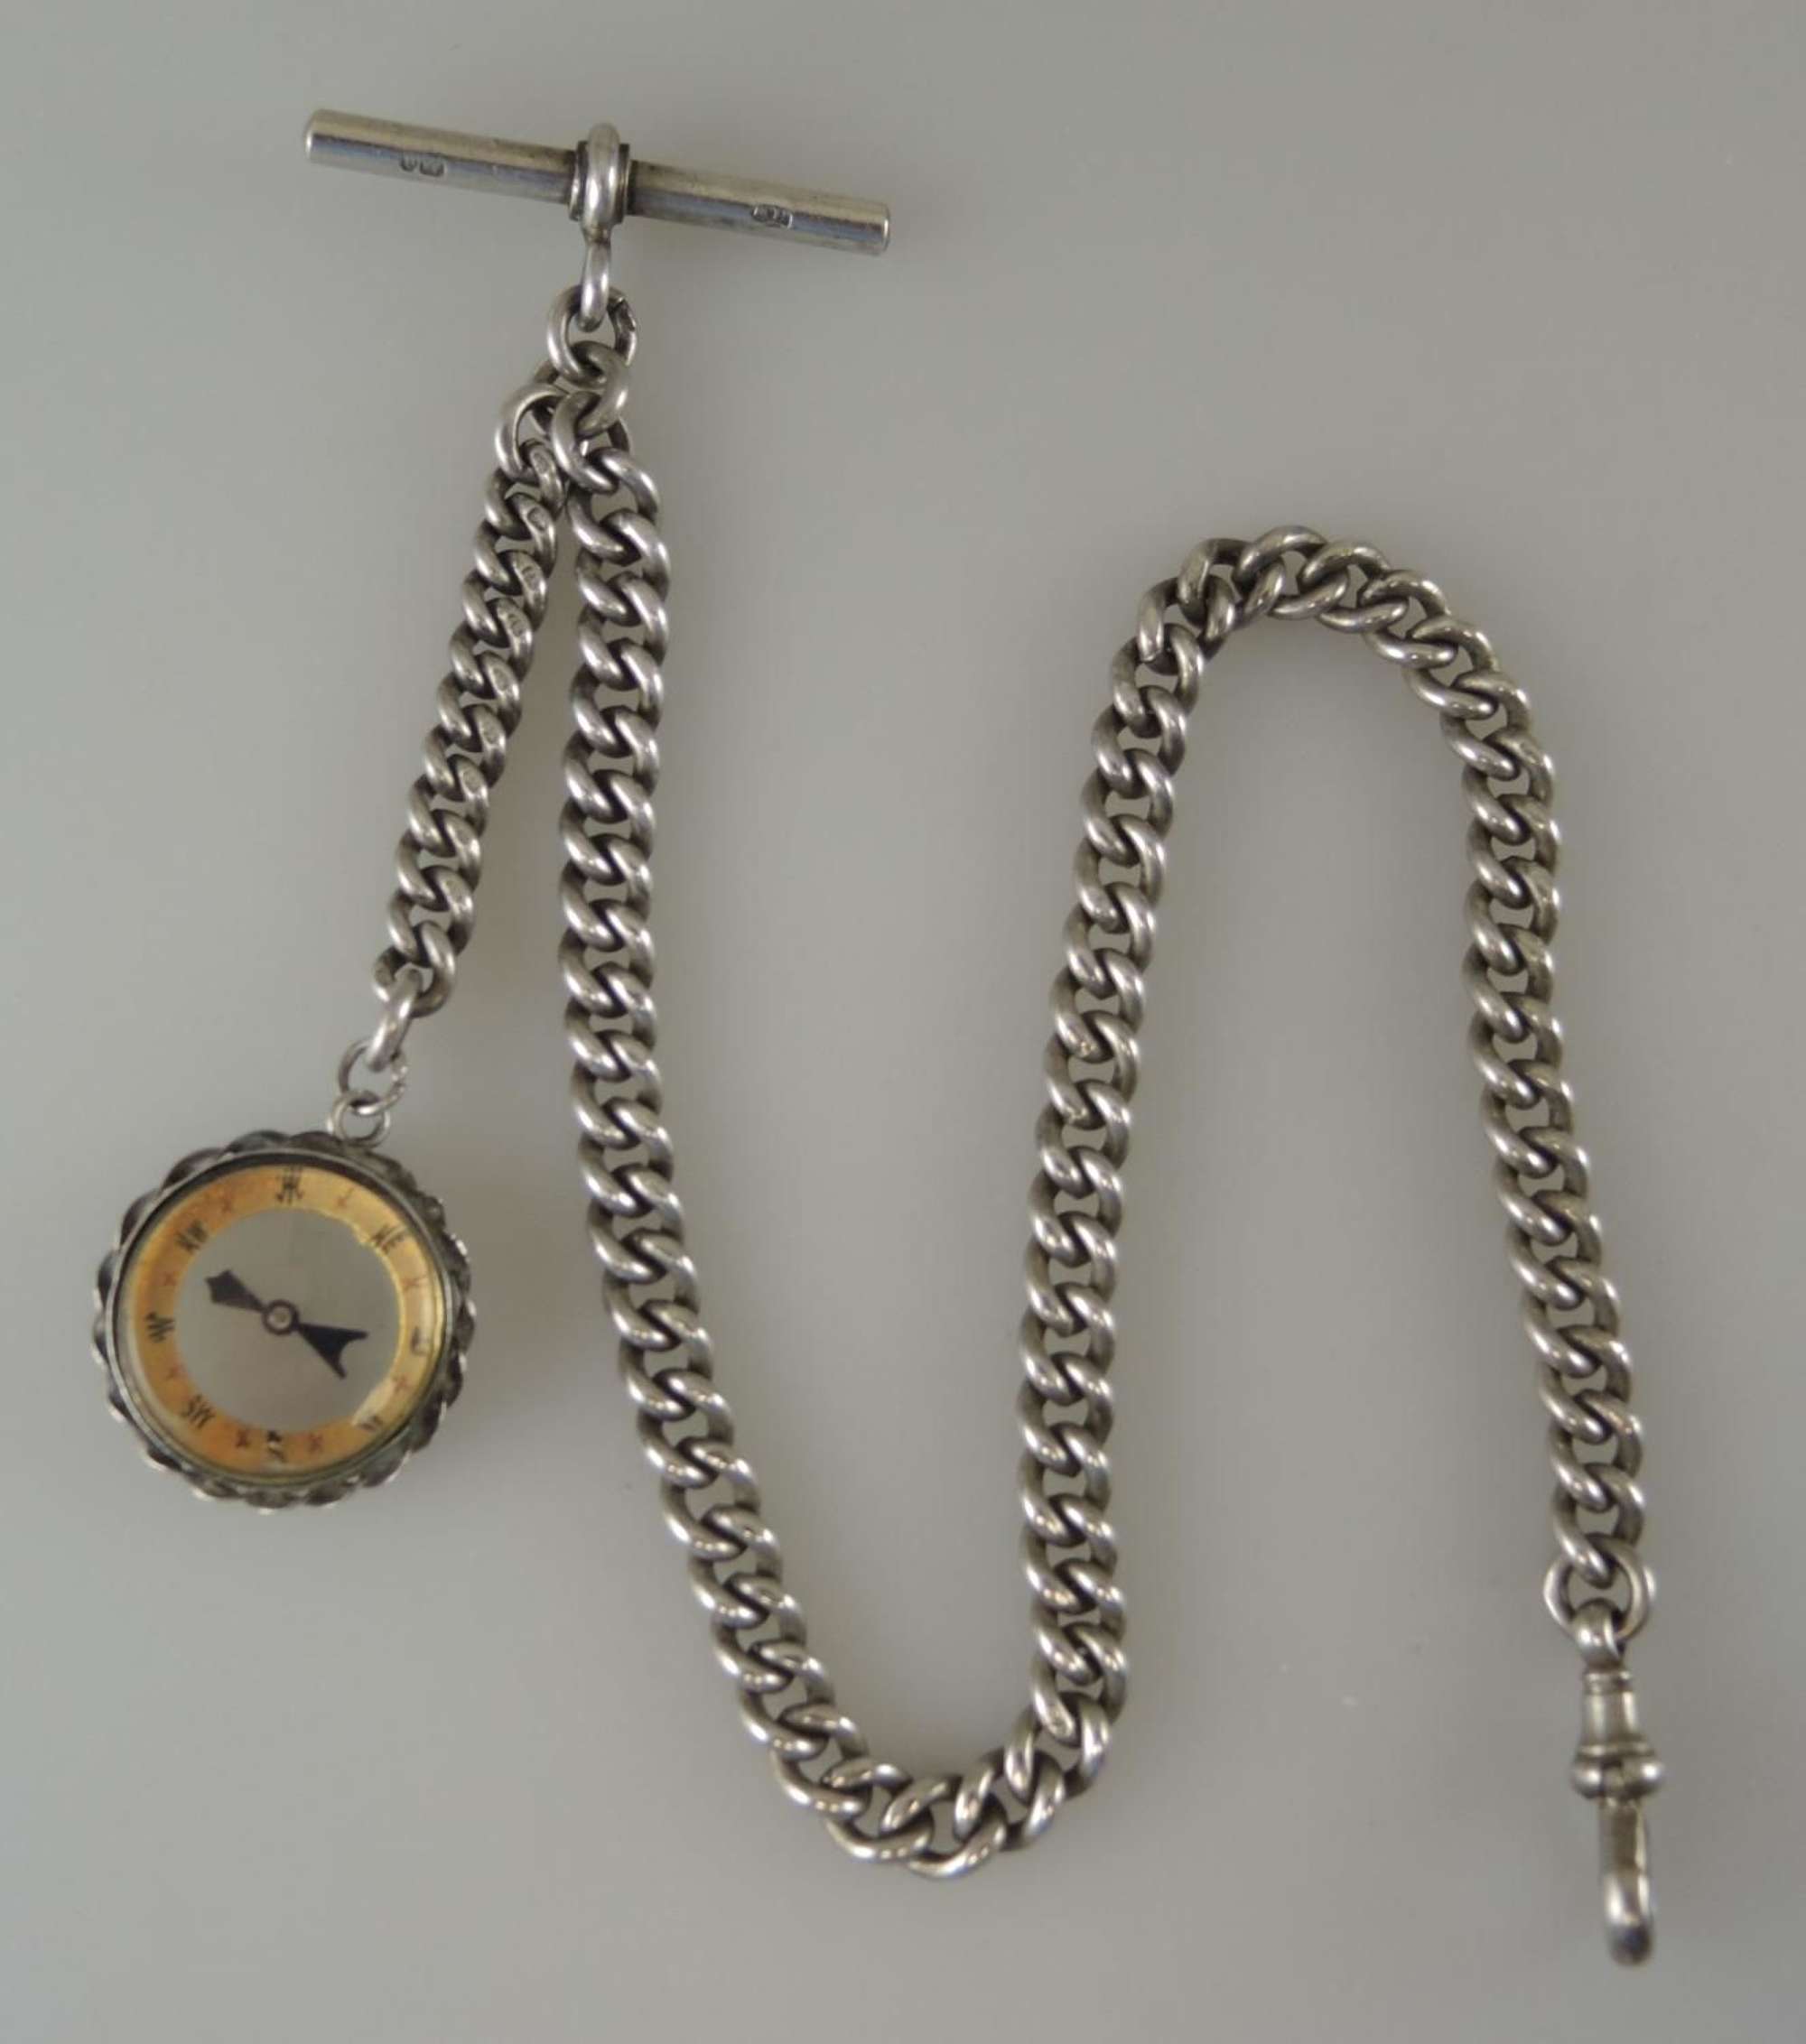 English Silver Albert Watch Chain with Compass Fob. Birmingham 1892